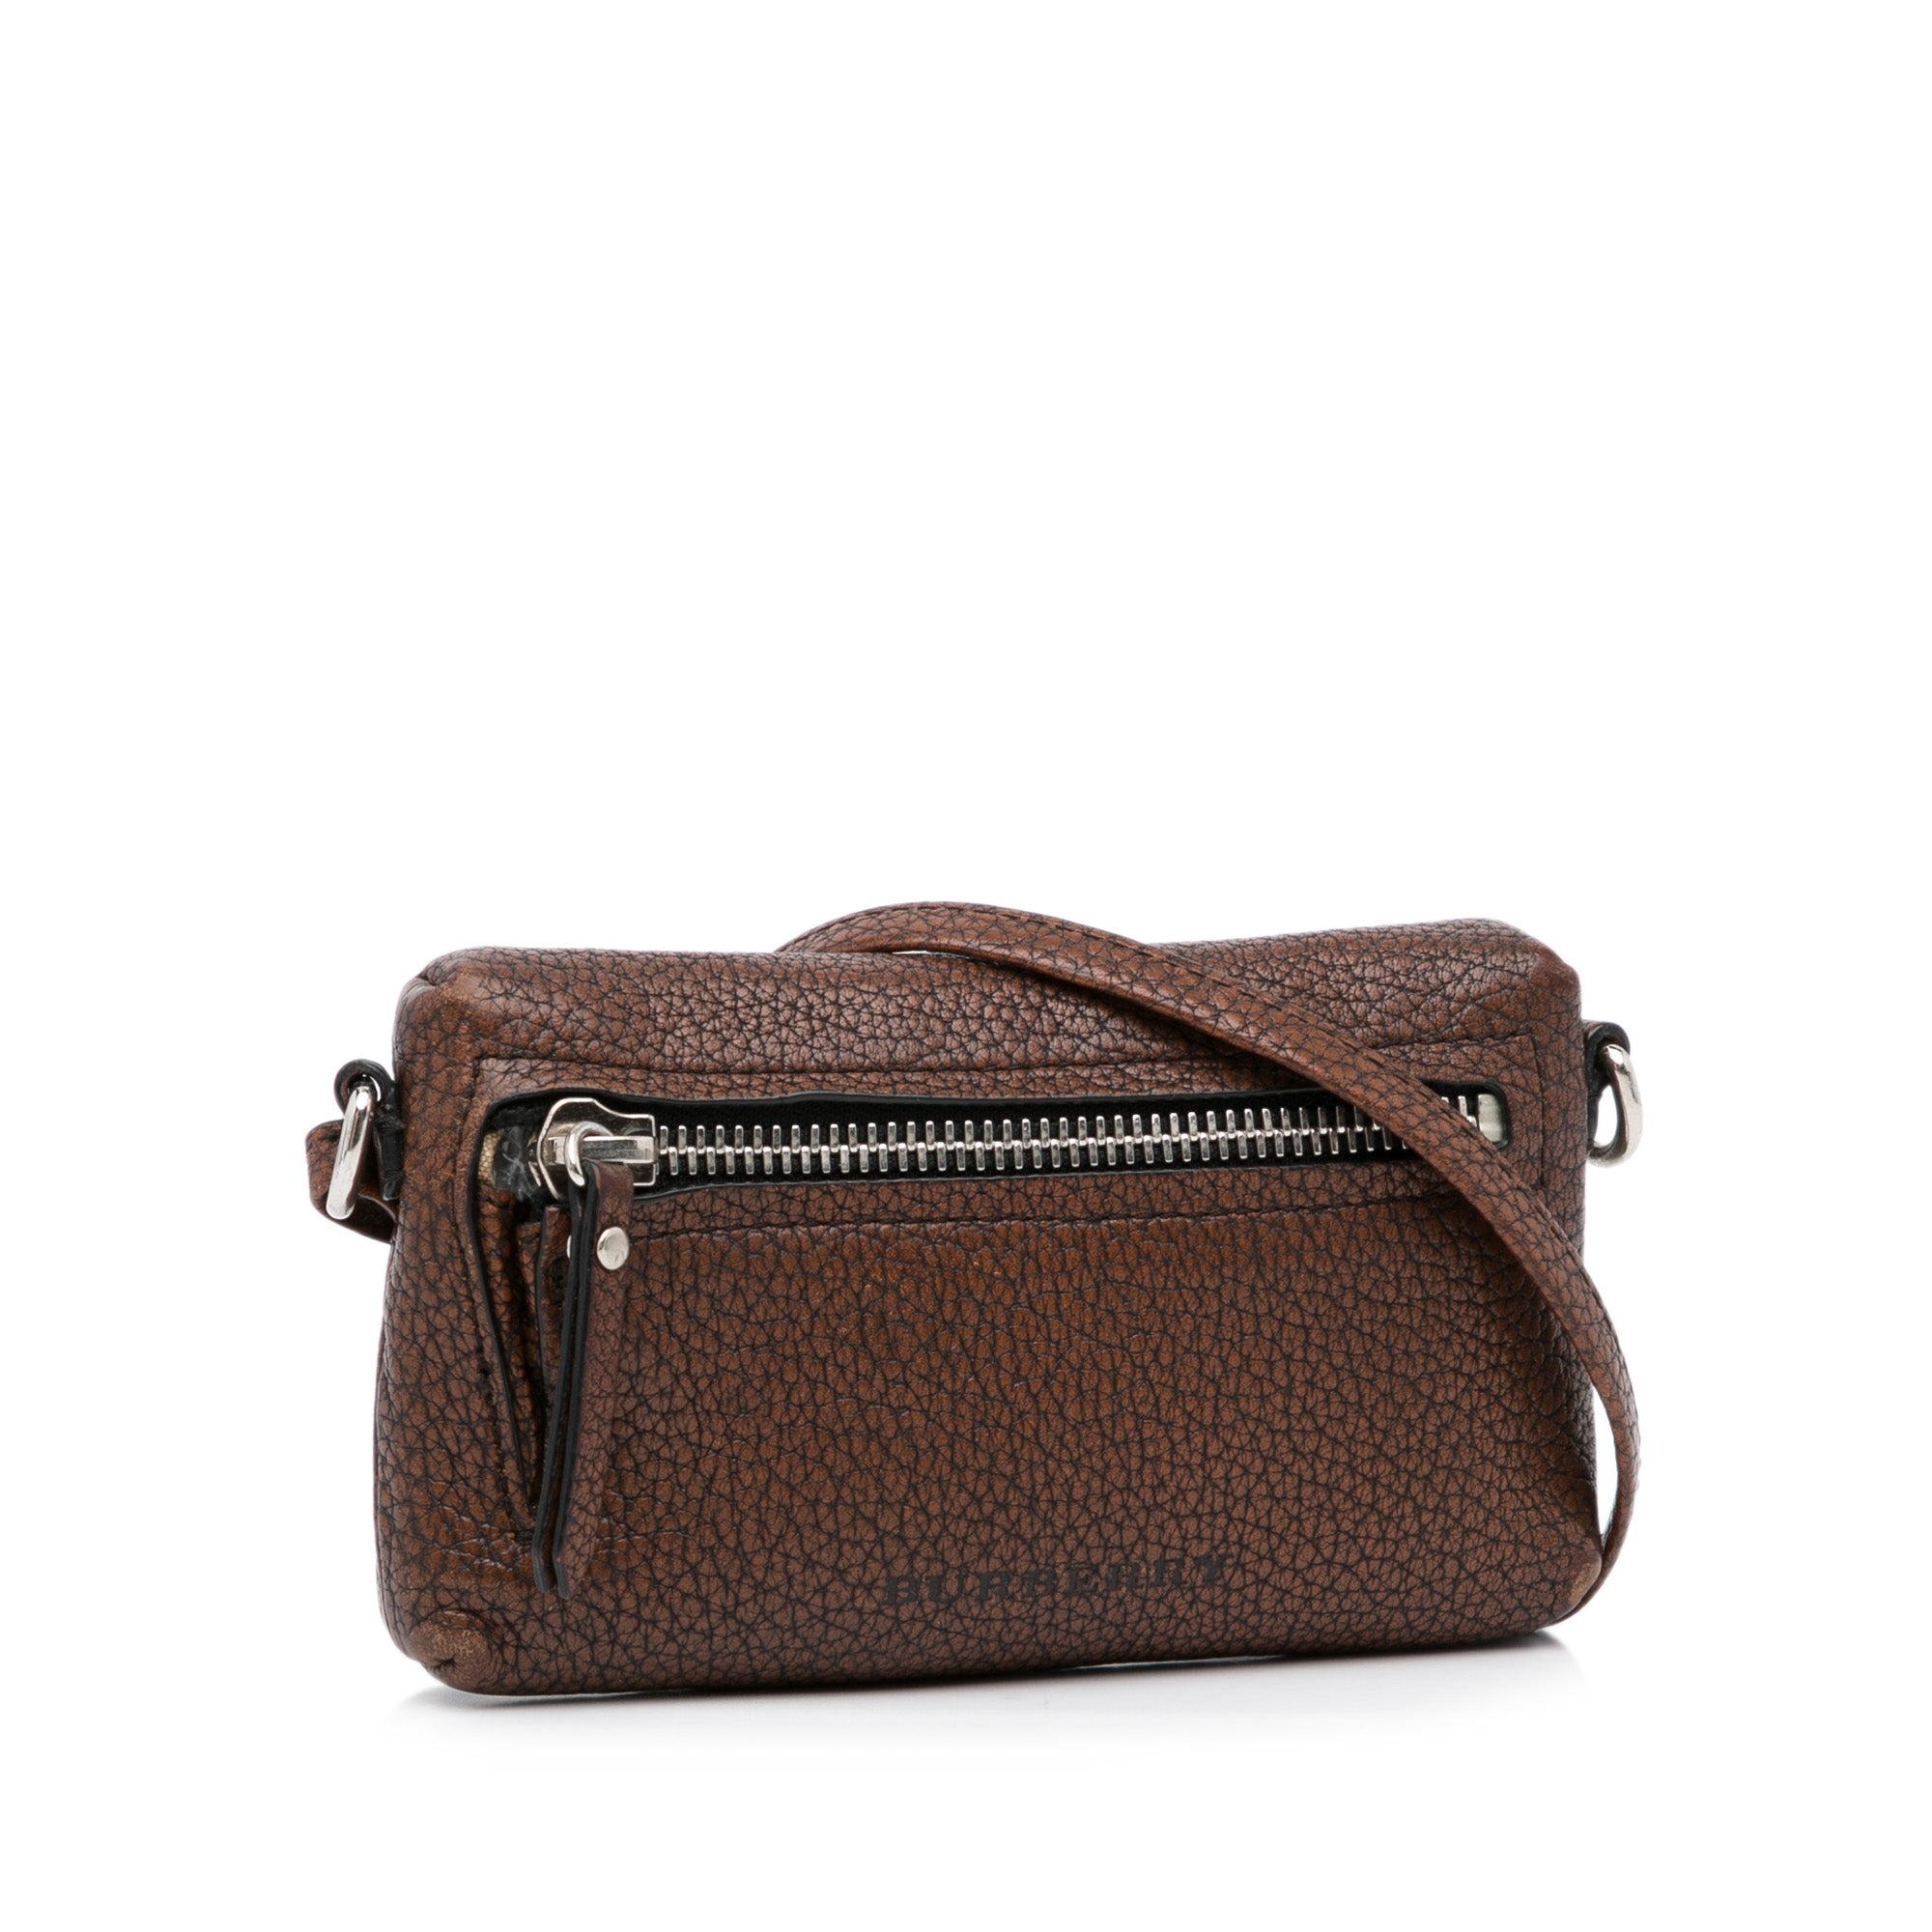 Brown Burberry Leather Crossbody Bag - Designer Revival